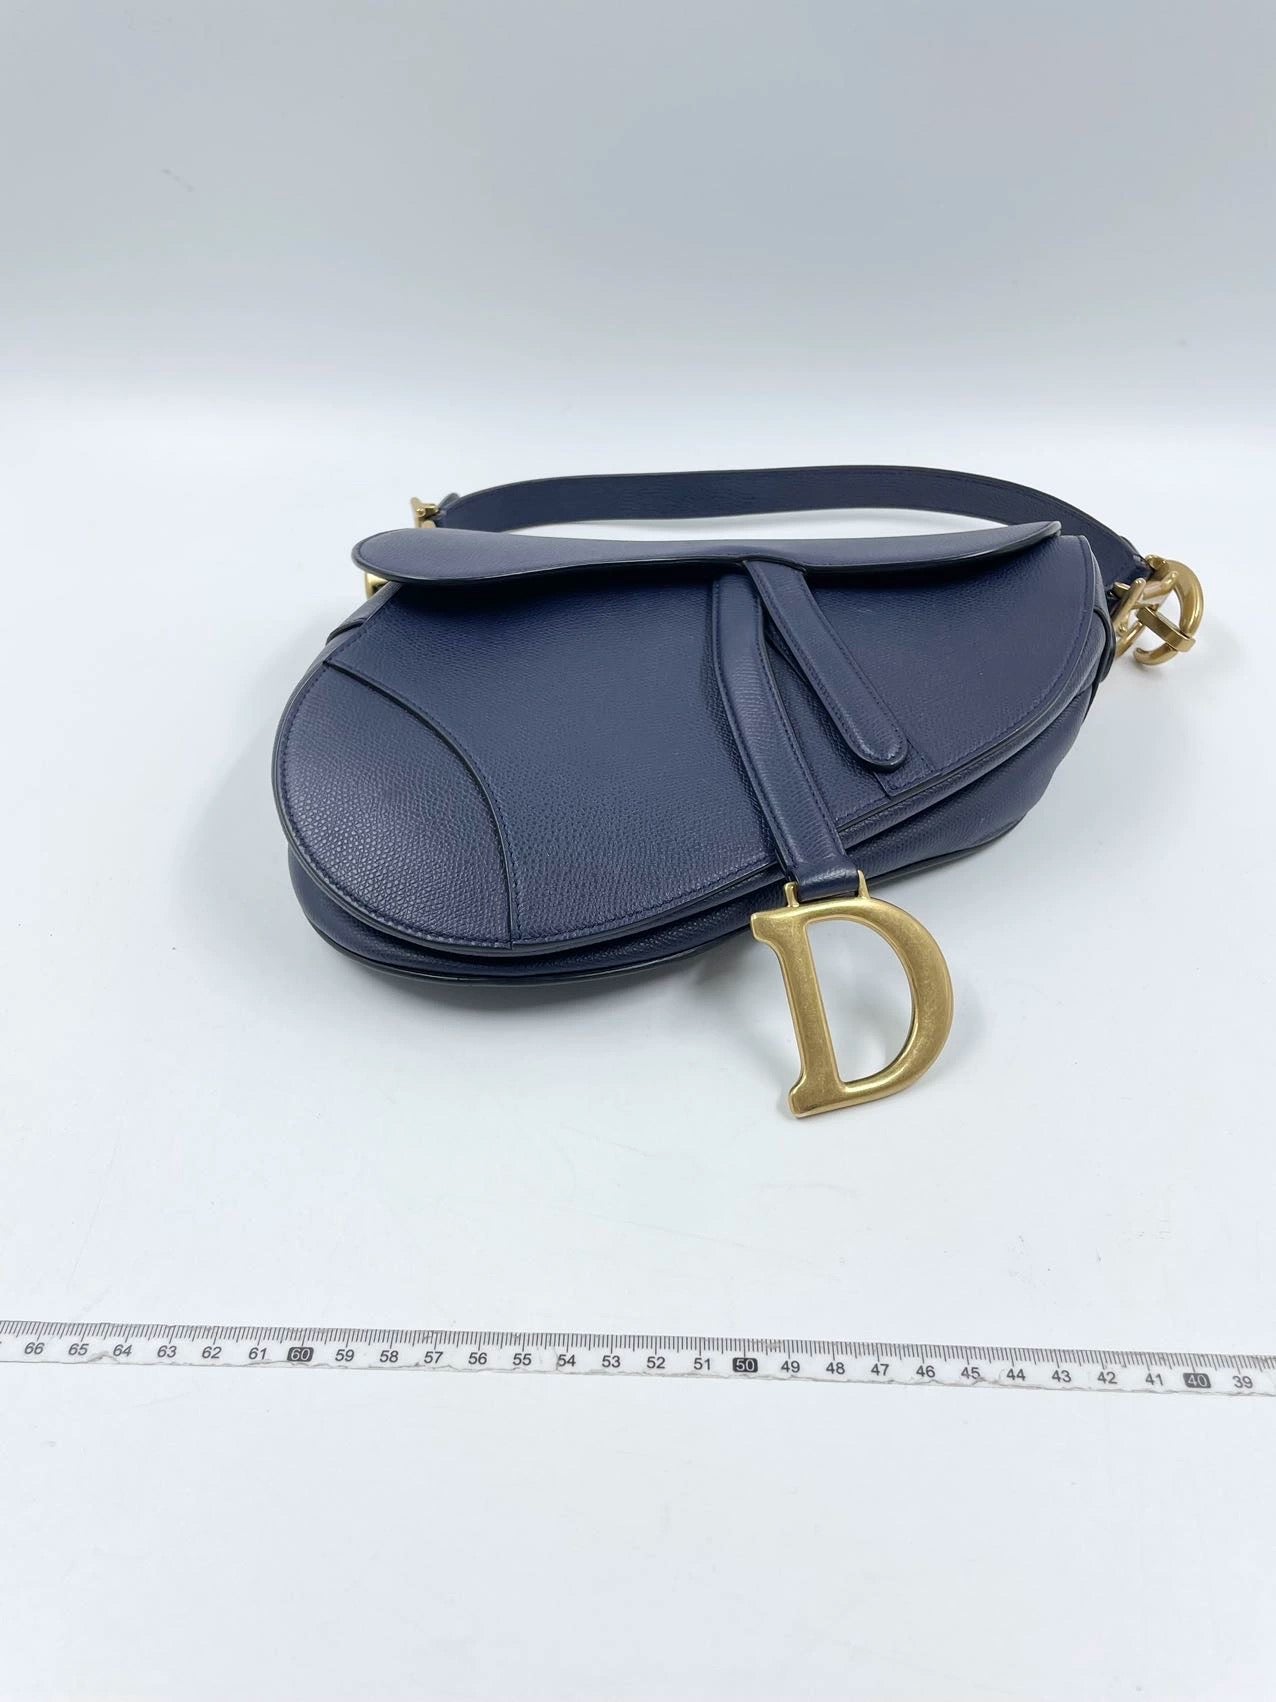 Sold Dior Saddle Blue Medium Grained Leather Handbag with Strap